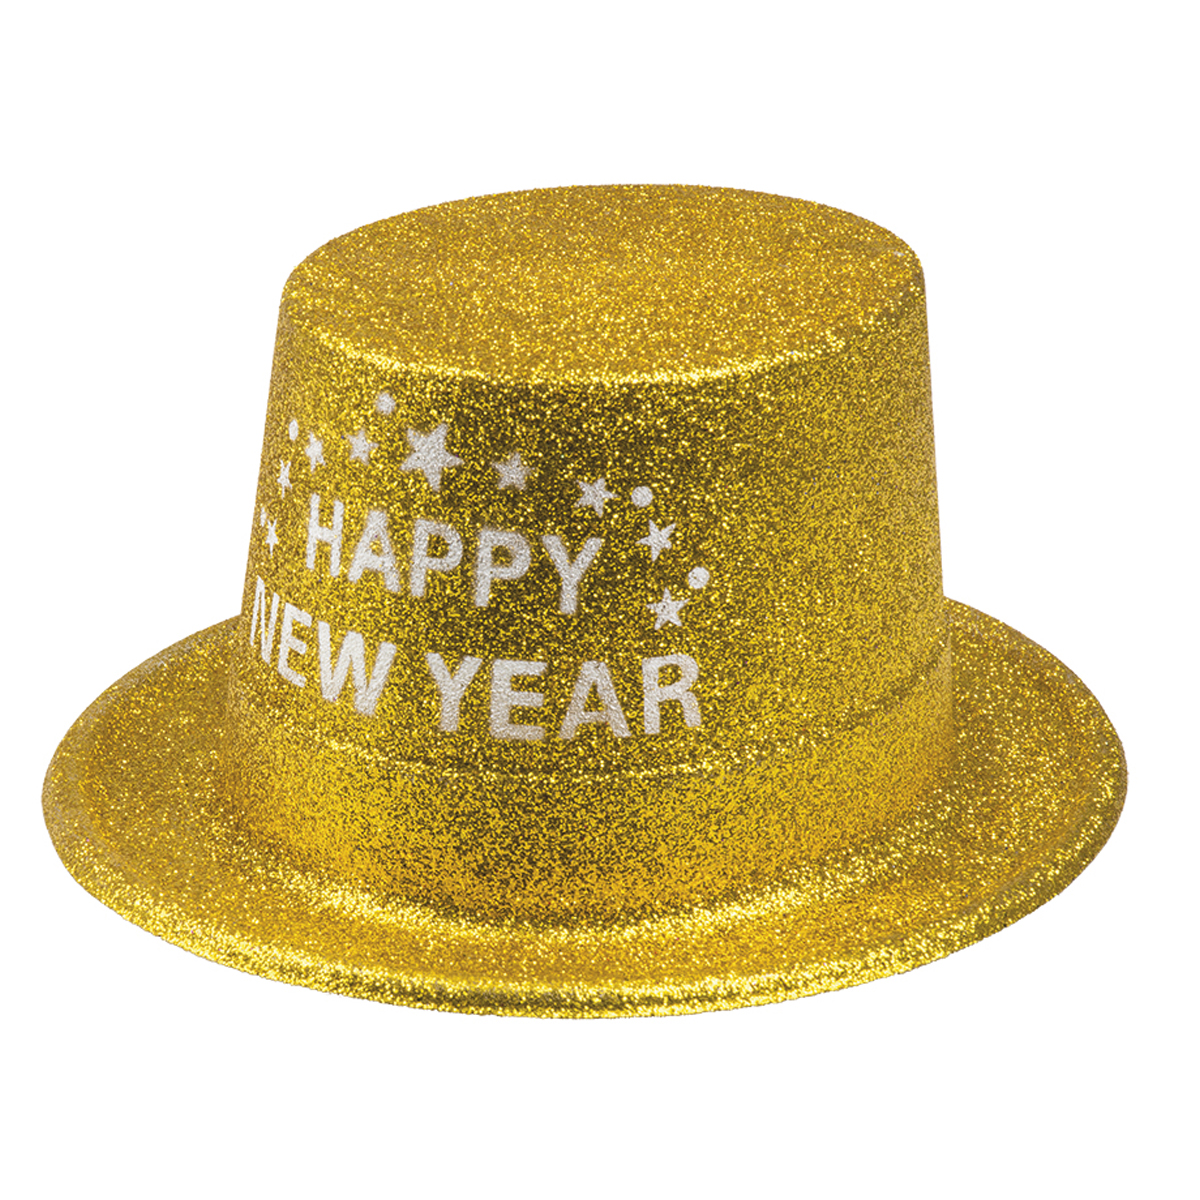 Glitterhatt guld happy new year